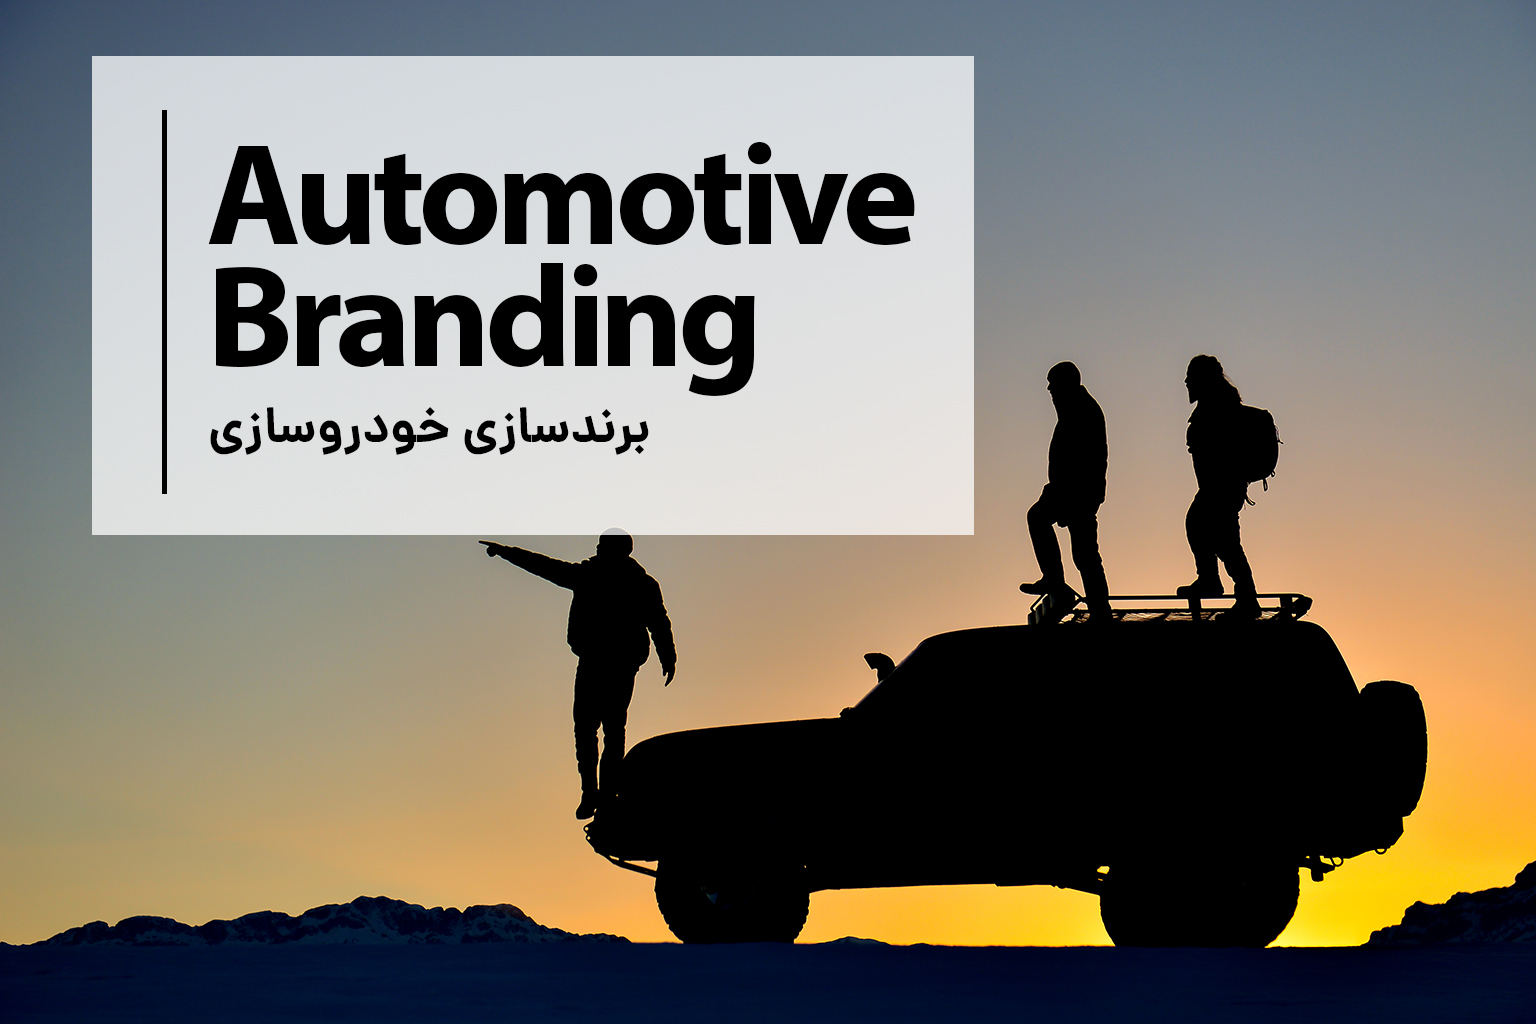 Automotive branding